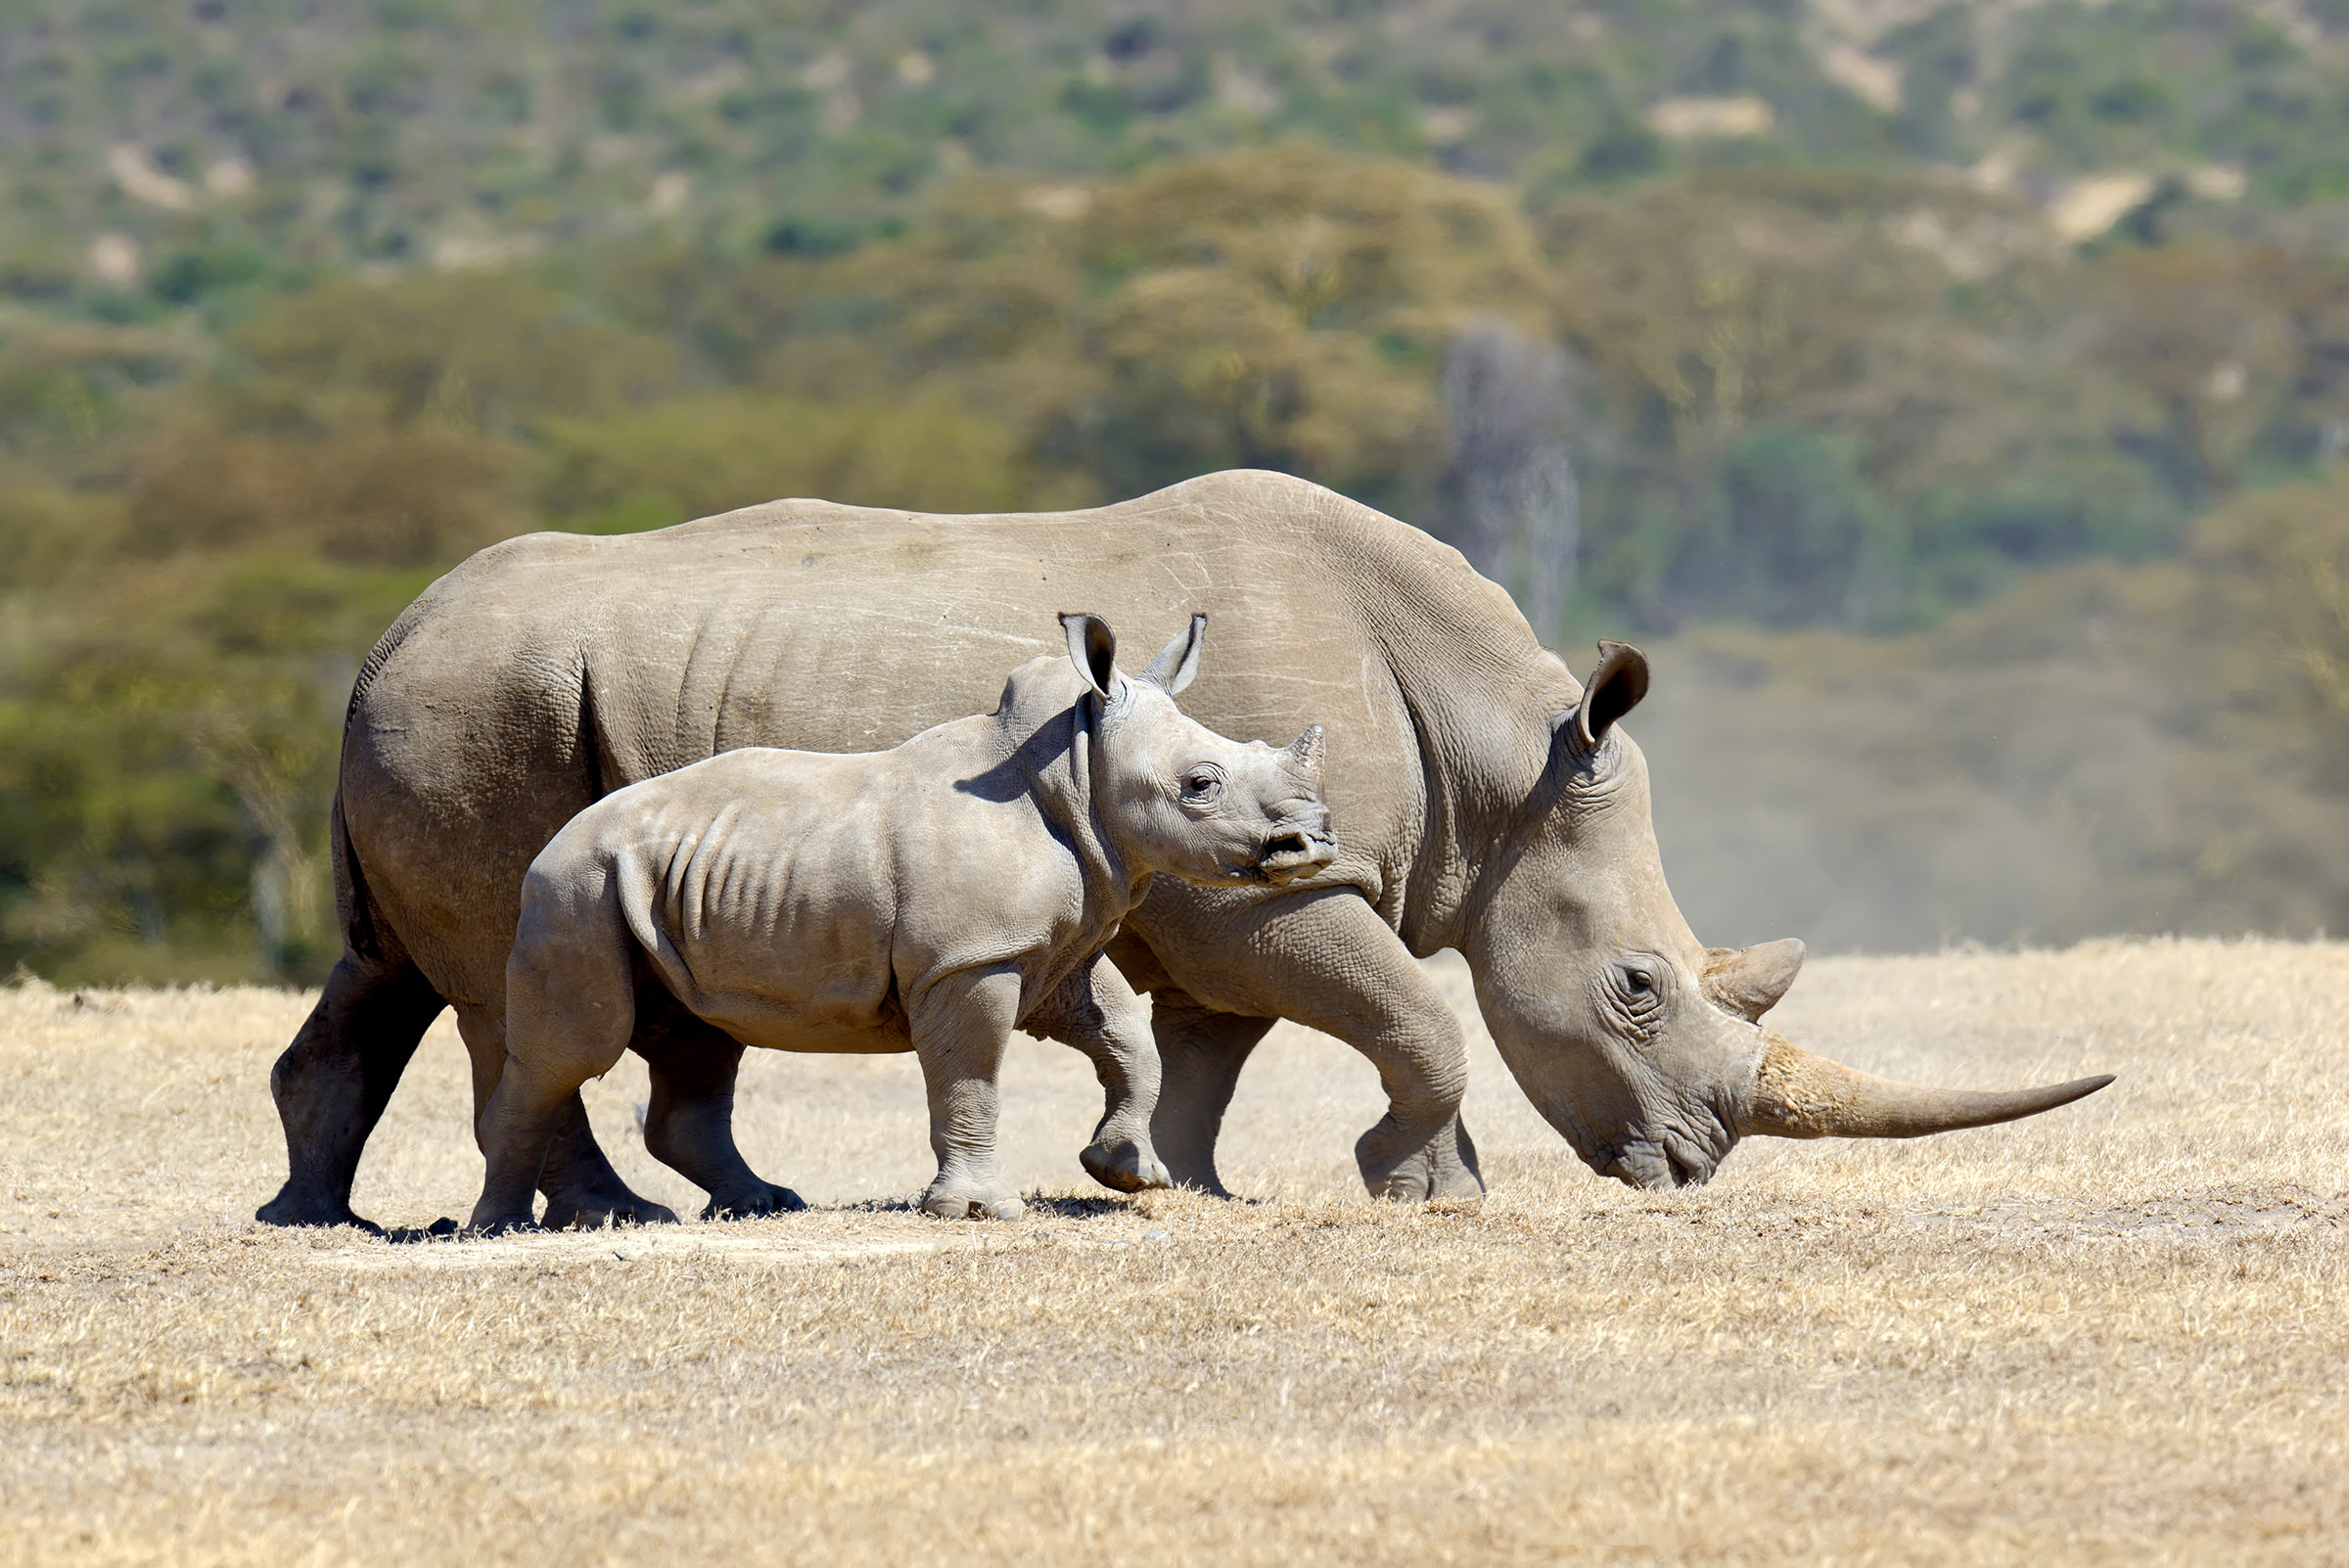 African white rhino, National park of Kenya